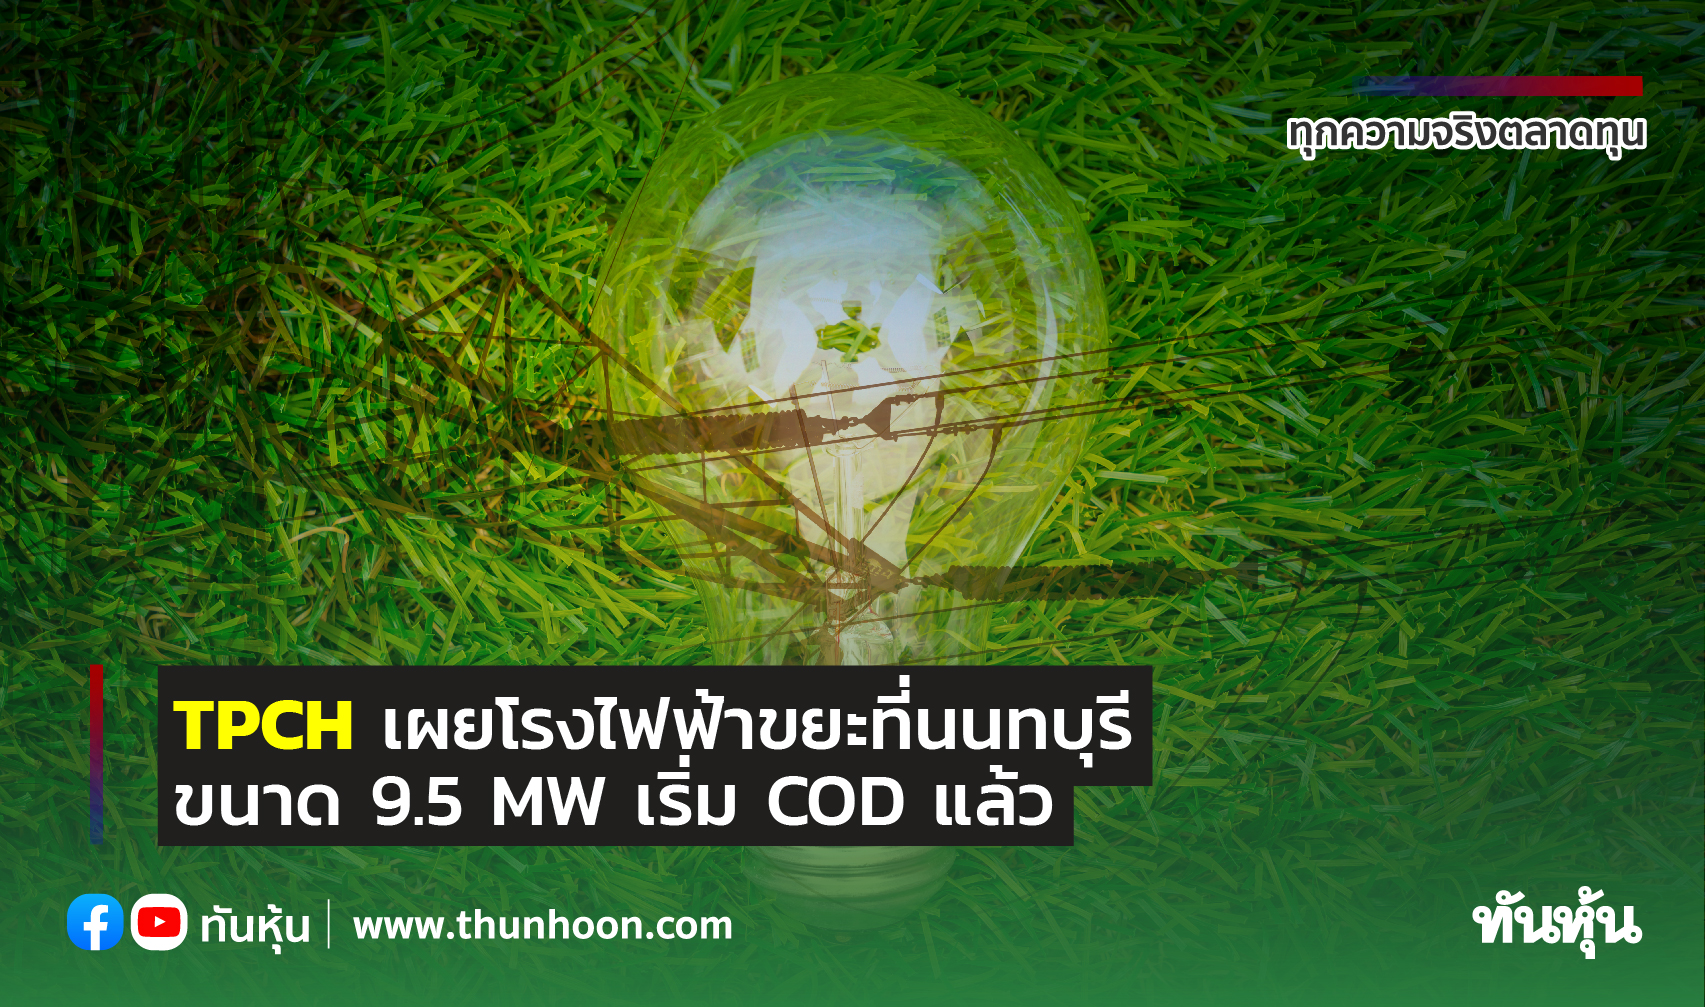 TPCH เผยโรงไฟฟ้าขยะที่นนทบุรี ขนาด 9.5 MW เริ่ม COD แล้ว